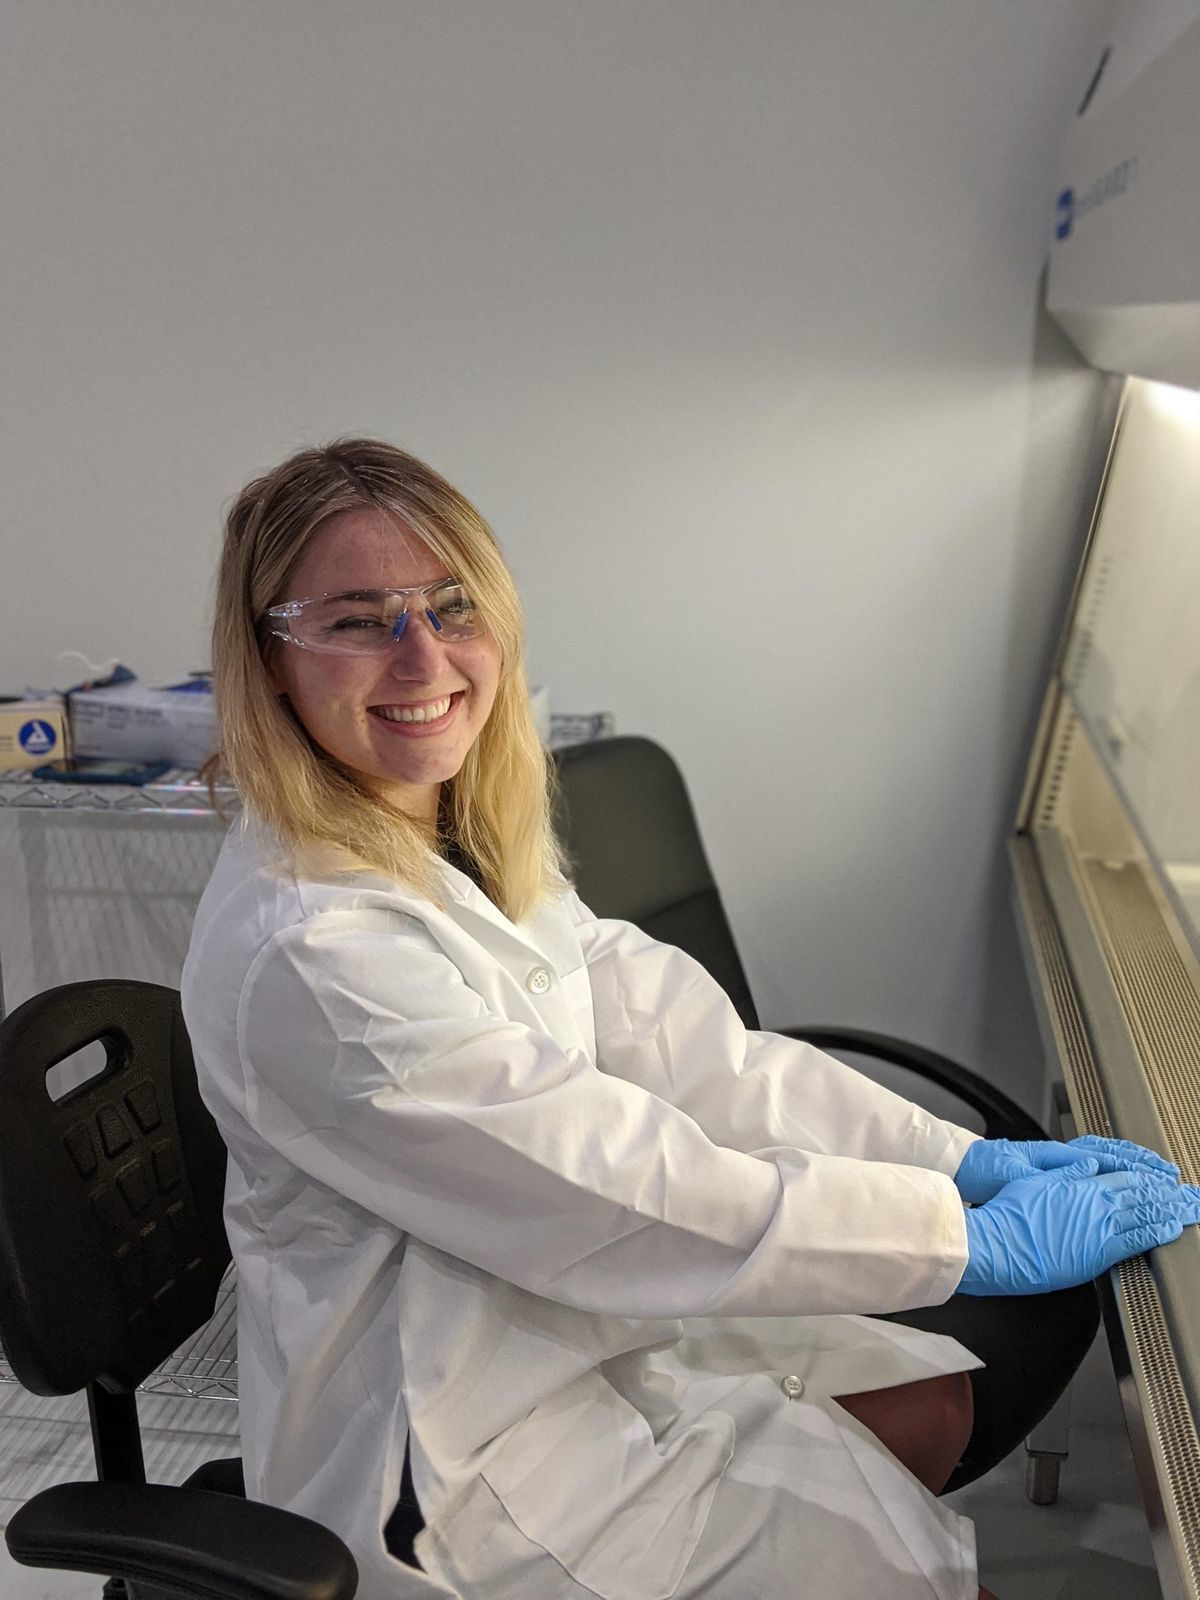 Student wearing lab coat smiles at camera